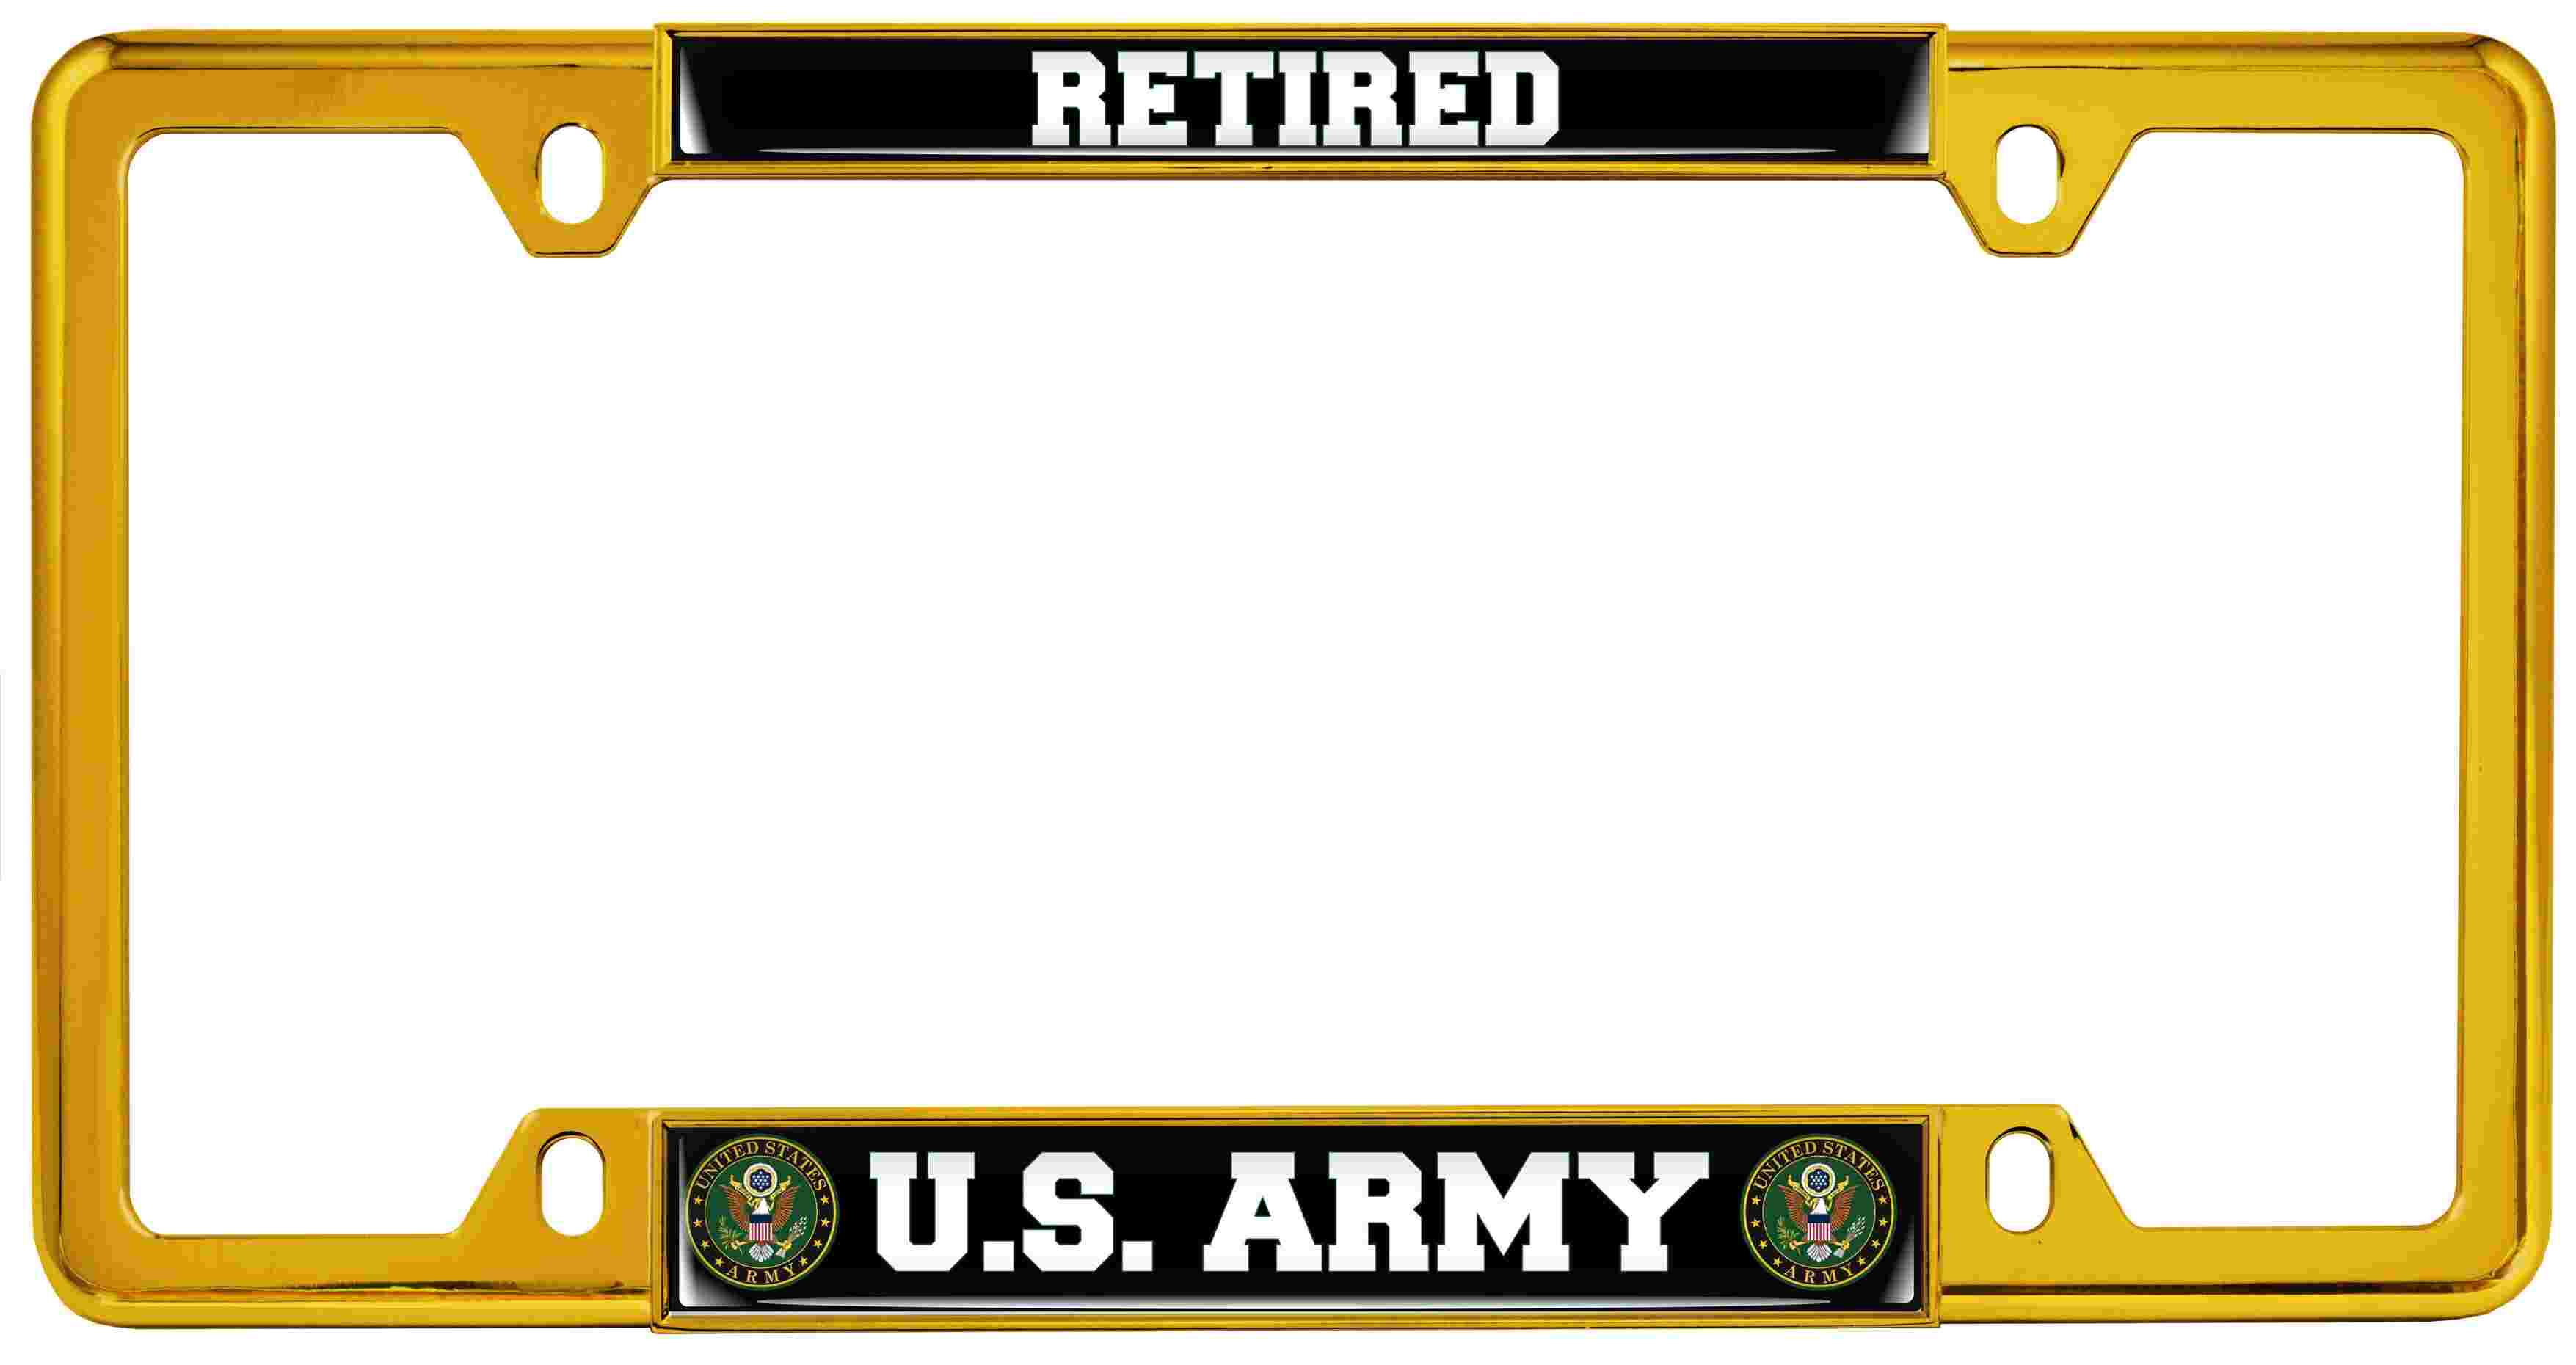 U.S. Army Retired - Car Metal License Plate Frame